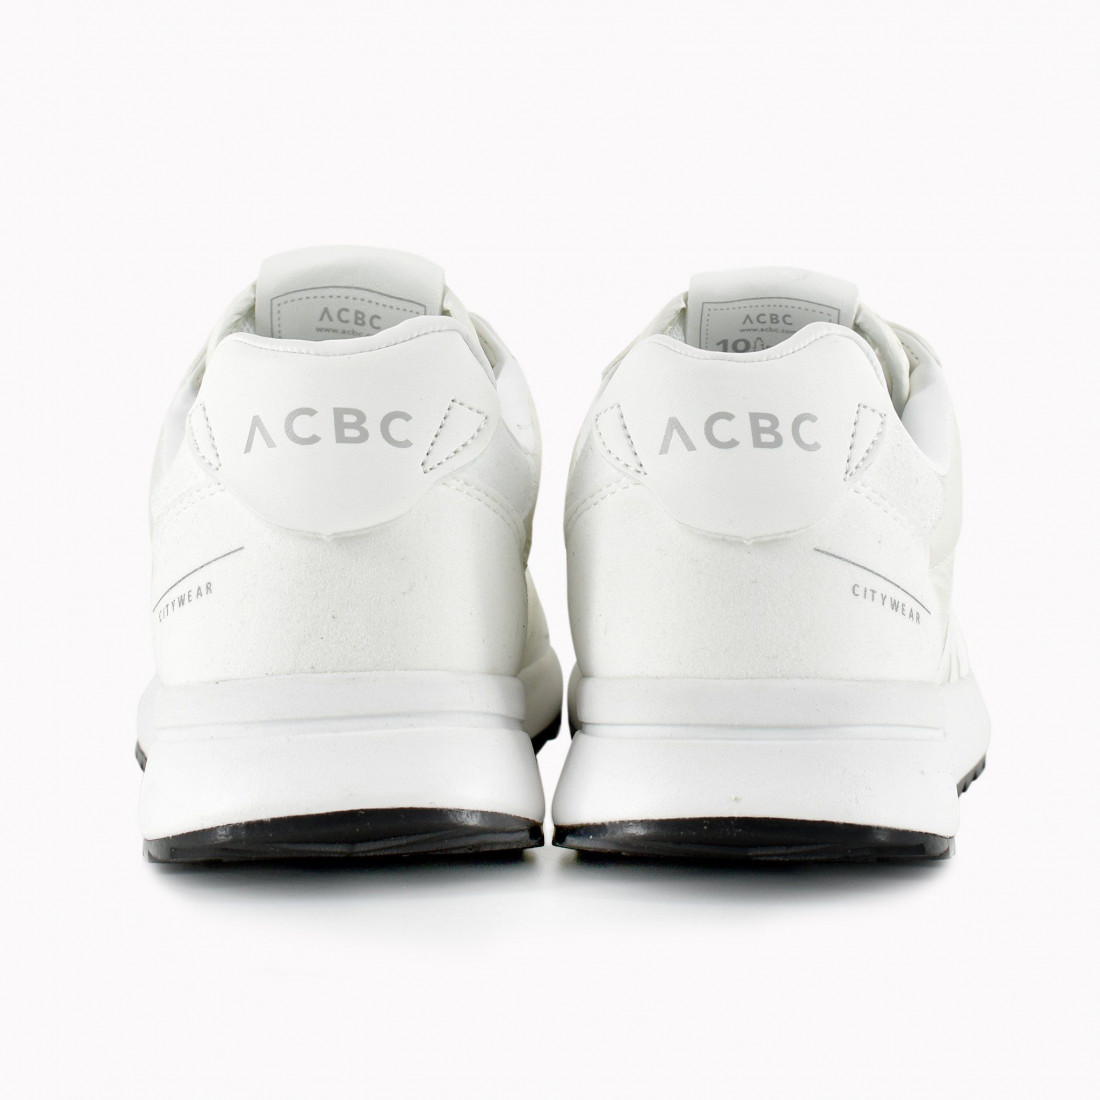 ACBC Ecowear weißer Damenschuh aus recycelten Materialien